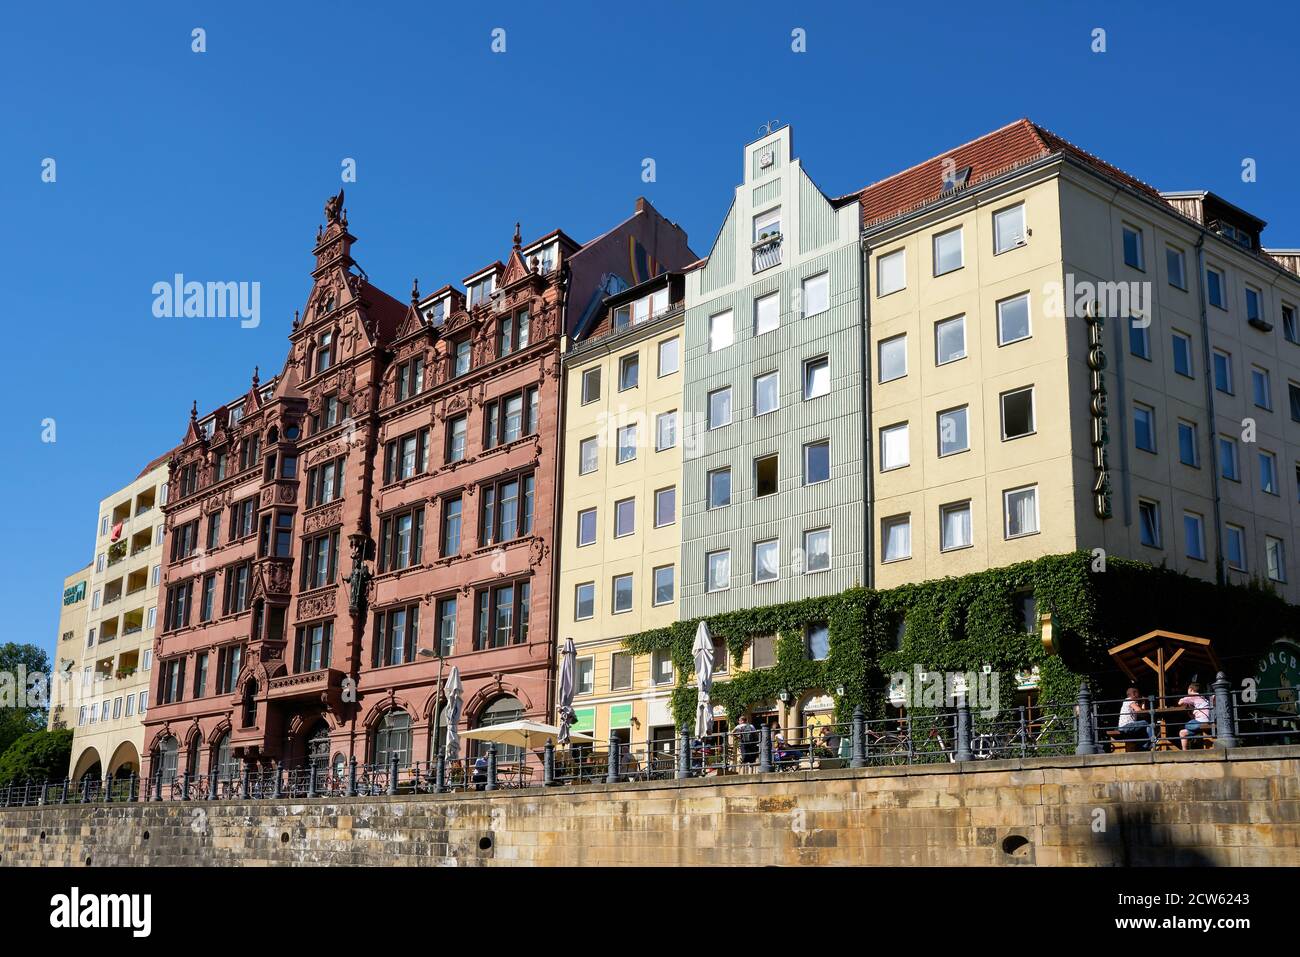 buildings in the Nikolai-Quarter in Berlin seen from the river Spree Stock Photo